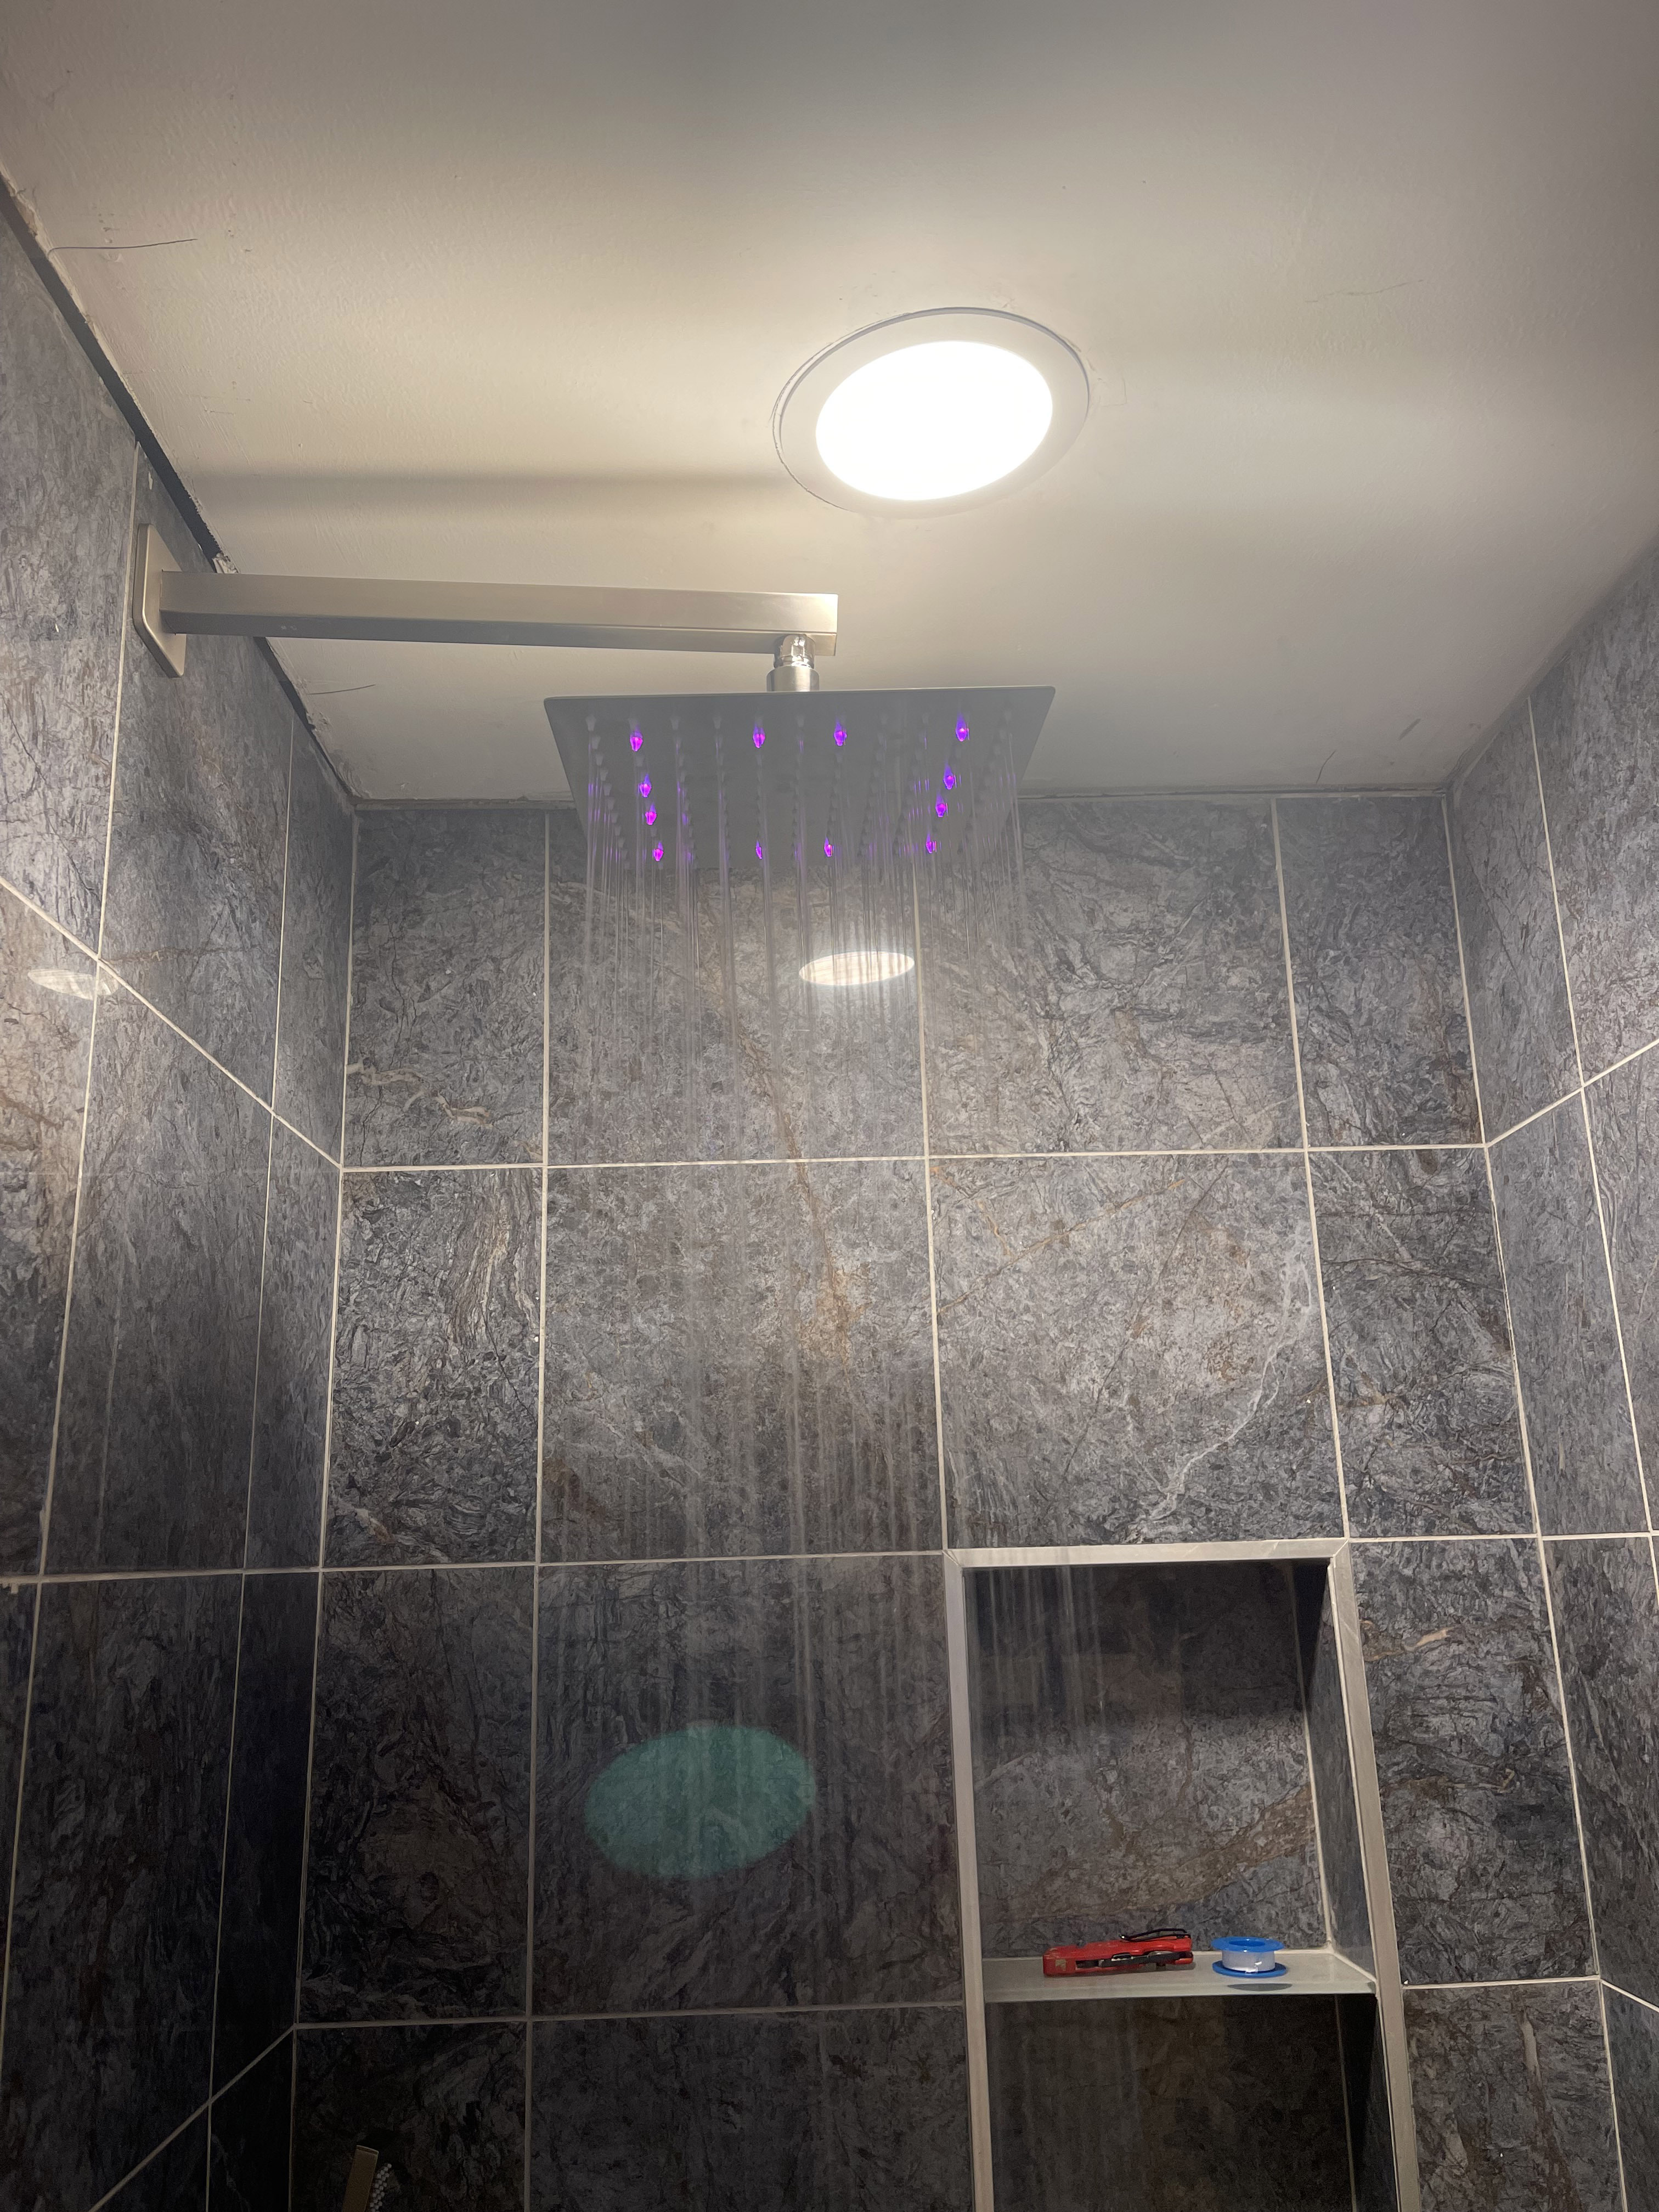 Lighted showerhead